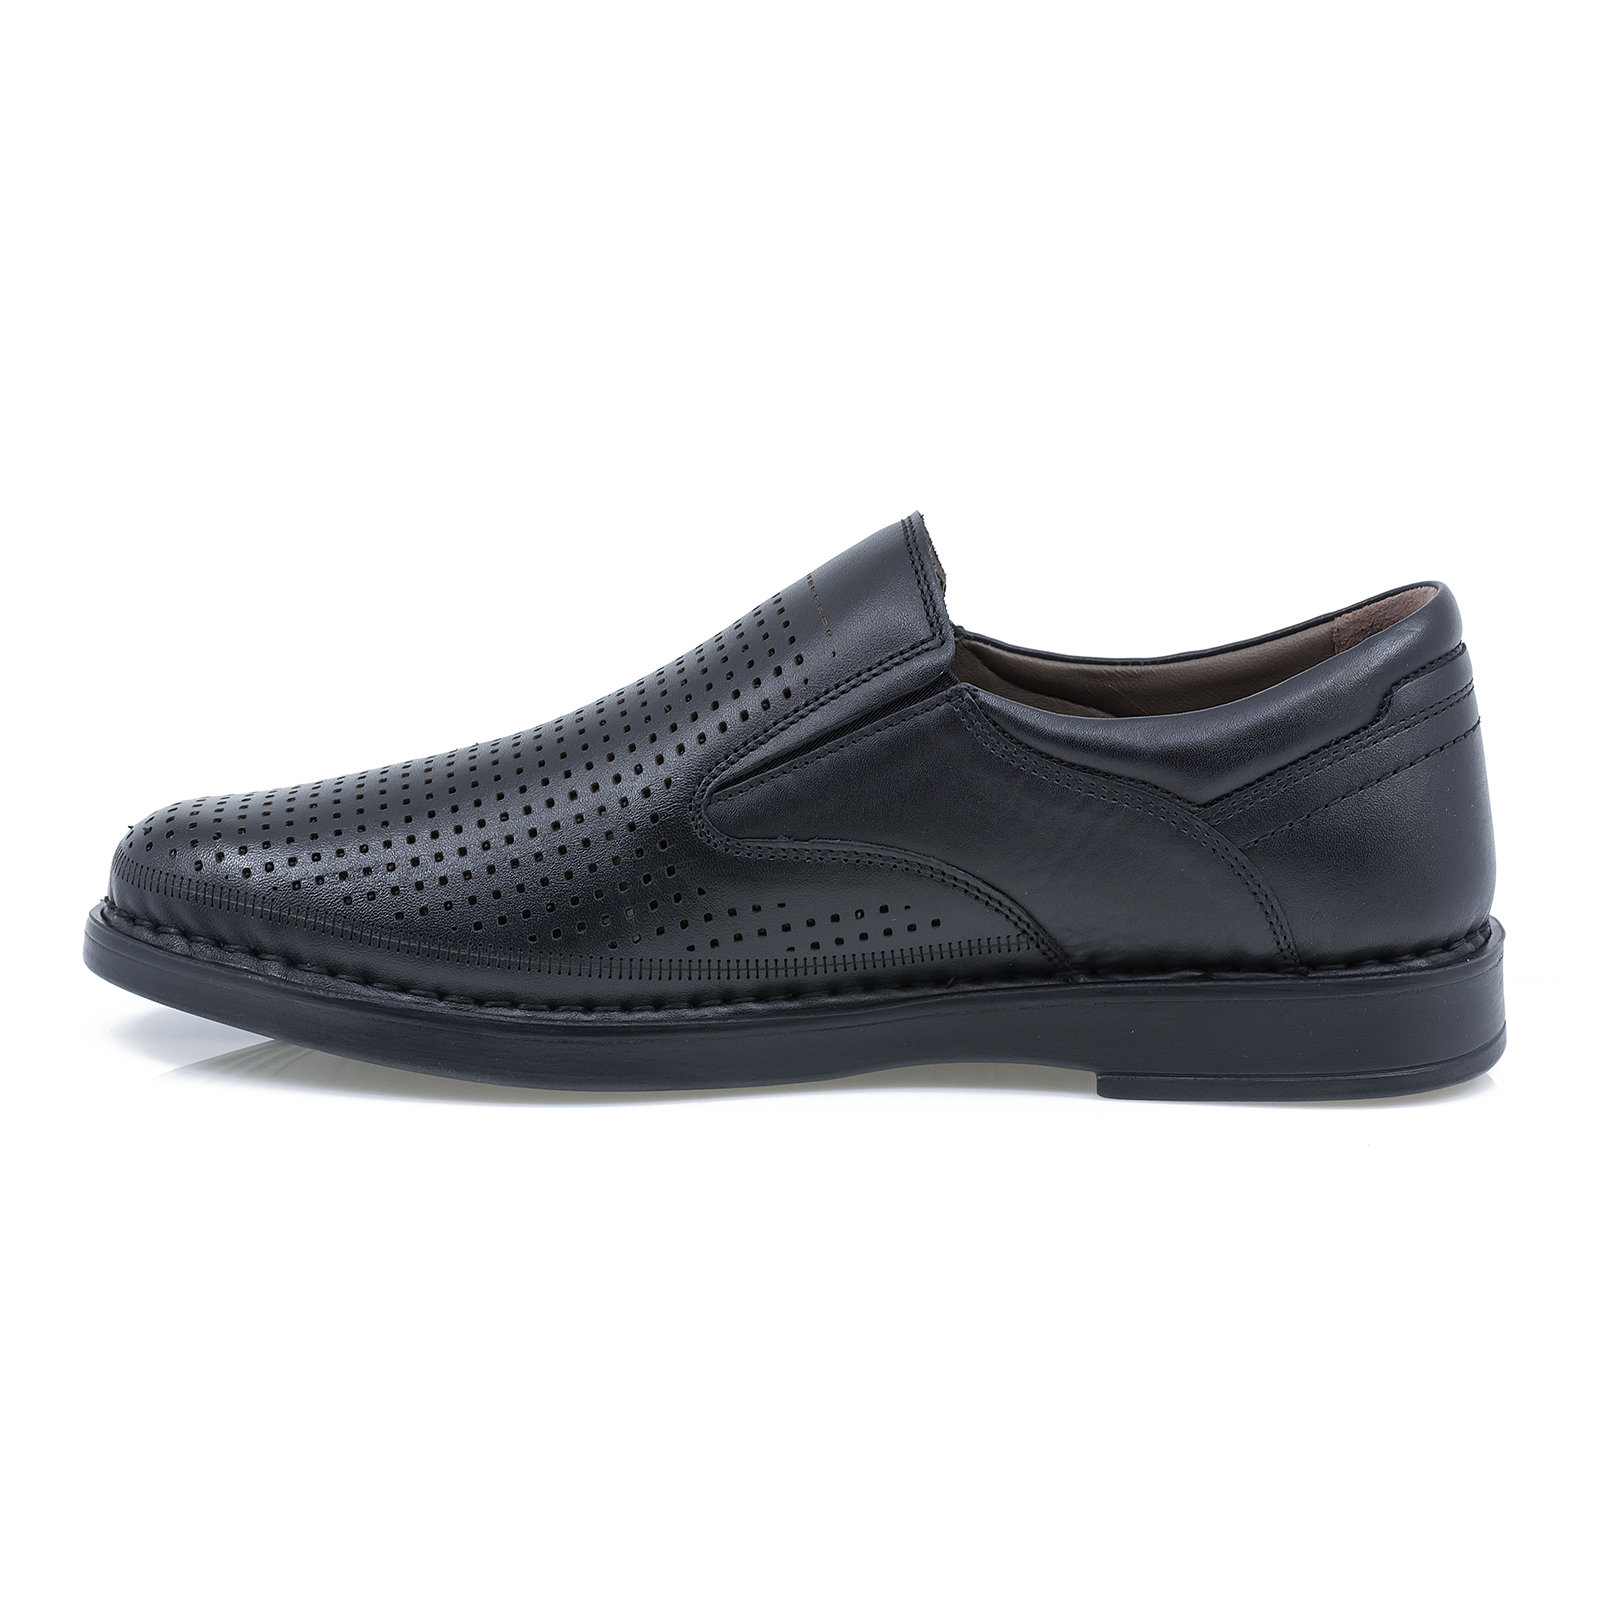 Pantofi-barbati-Dimport-104-3-eleganti-piele-naturala-negru-nouamoda-2